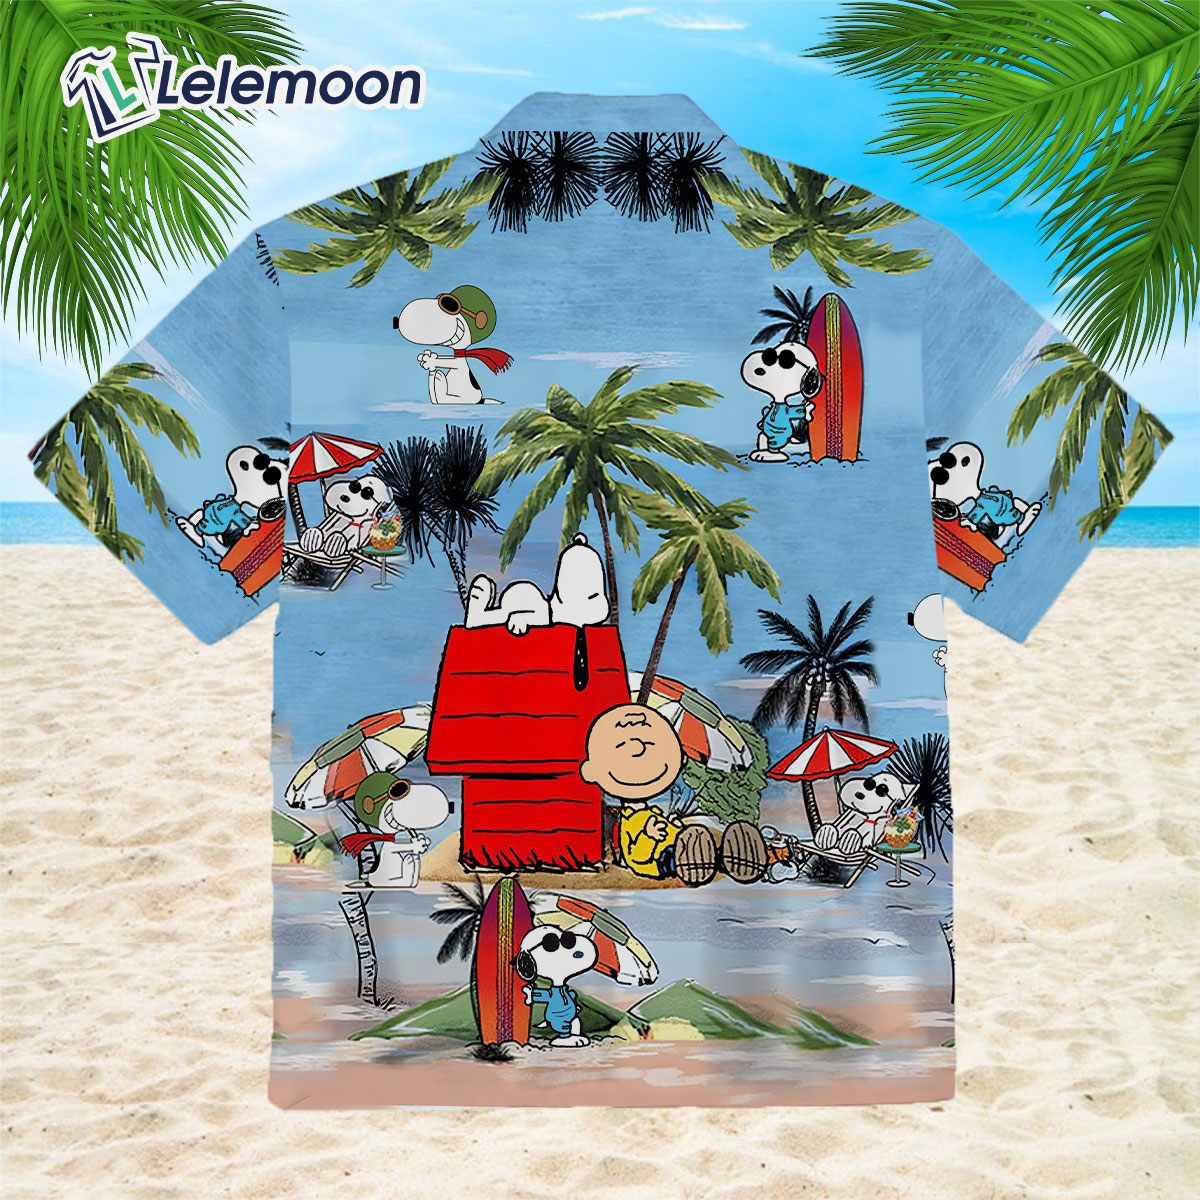 Funny Snoopy Miami Heat Funny Hawaiian Shirt For Basketball Lovers -  Limotees